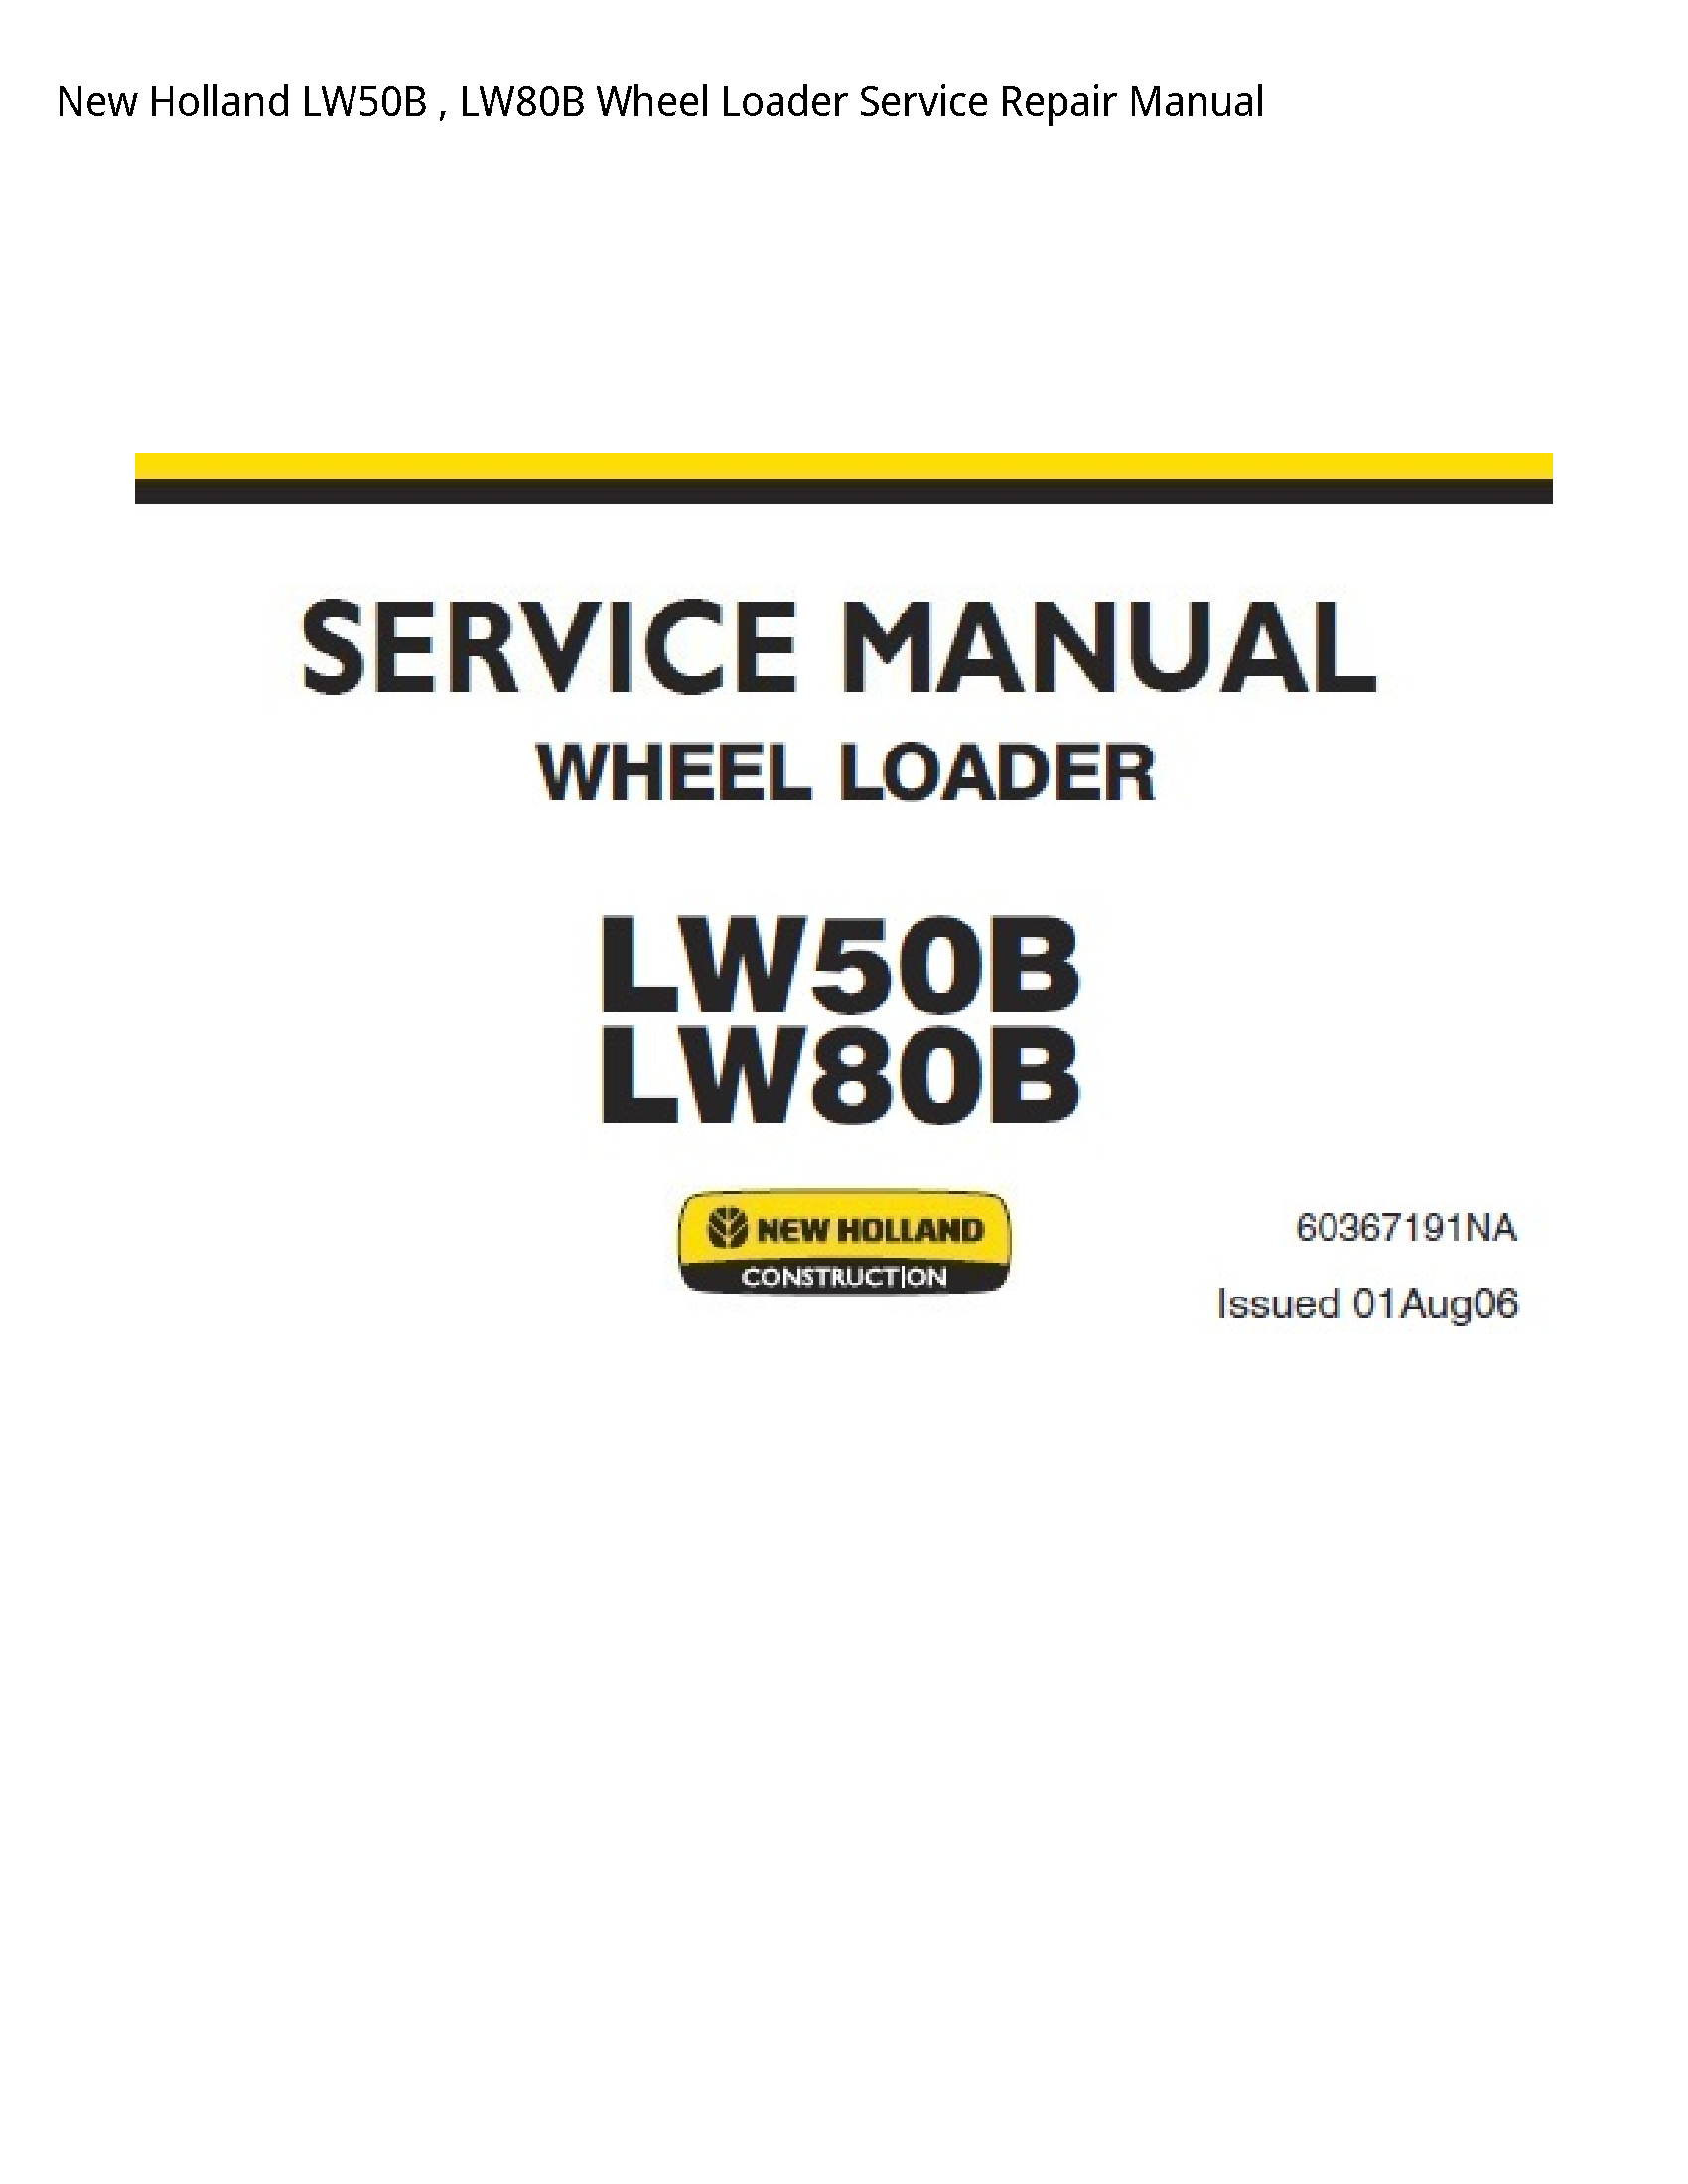 New Holland LW50B Wheel Loader manual